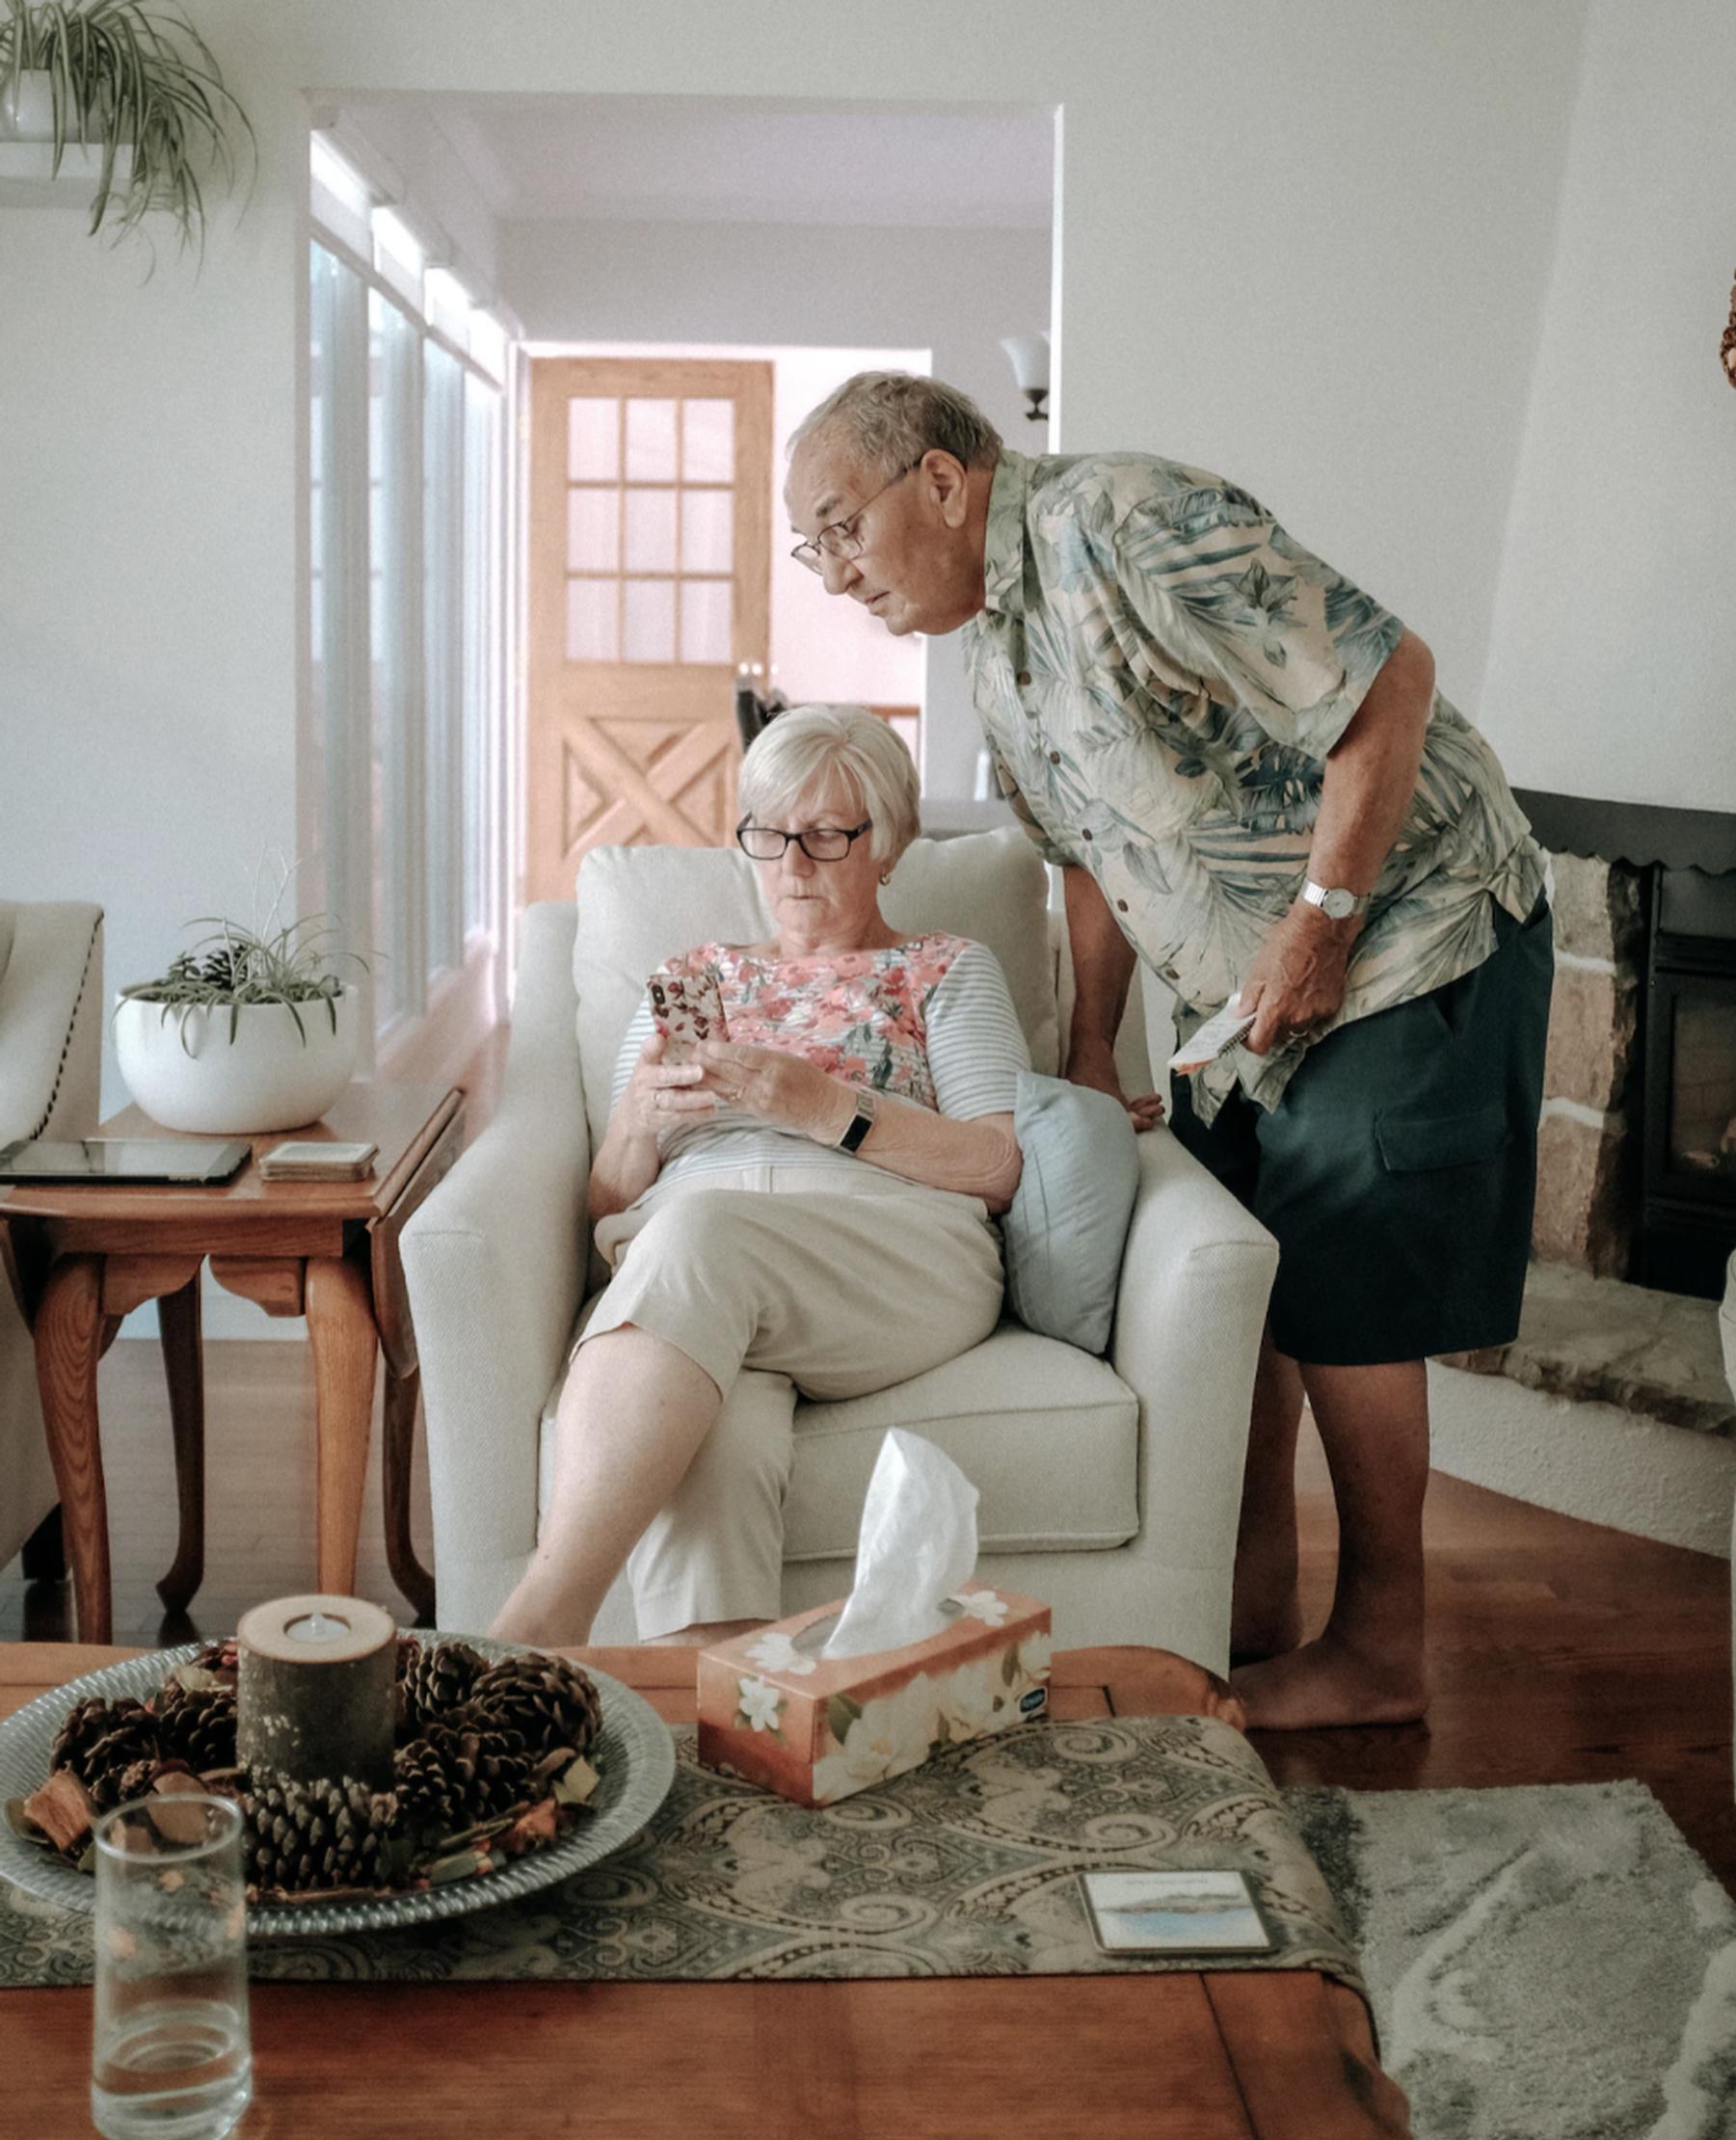 UK pensioners believe smartphones make their lives better